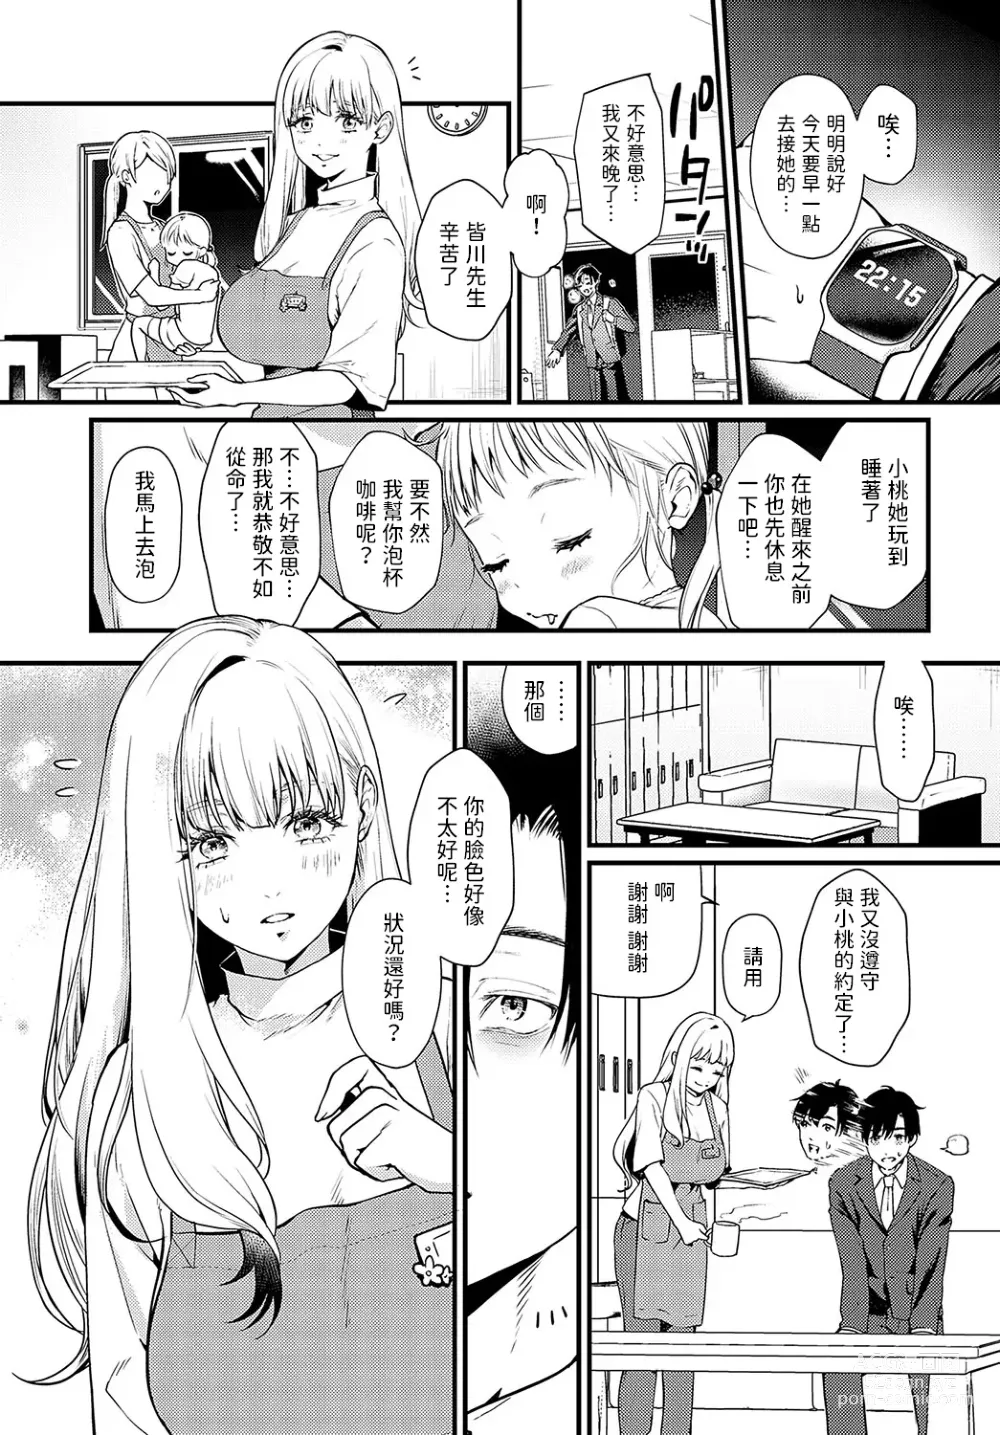 Page 3 of manga Yuuwaku Sweets Home